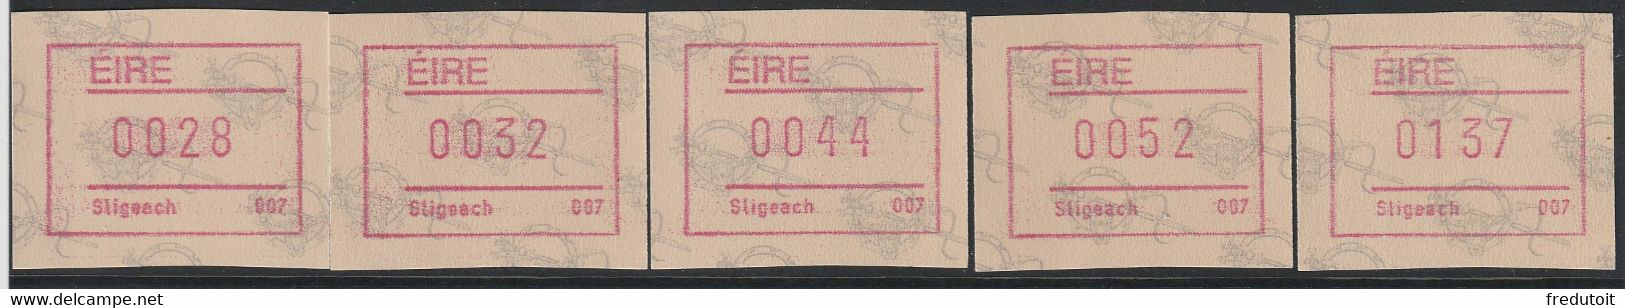 IRLANDE - Timbres Distributeurs / FRAMA  ATM - N°4** (1992) Sligeach 007 - Automatenmarken (Frama)